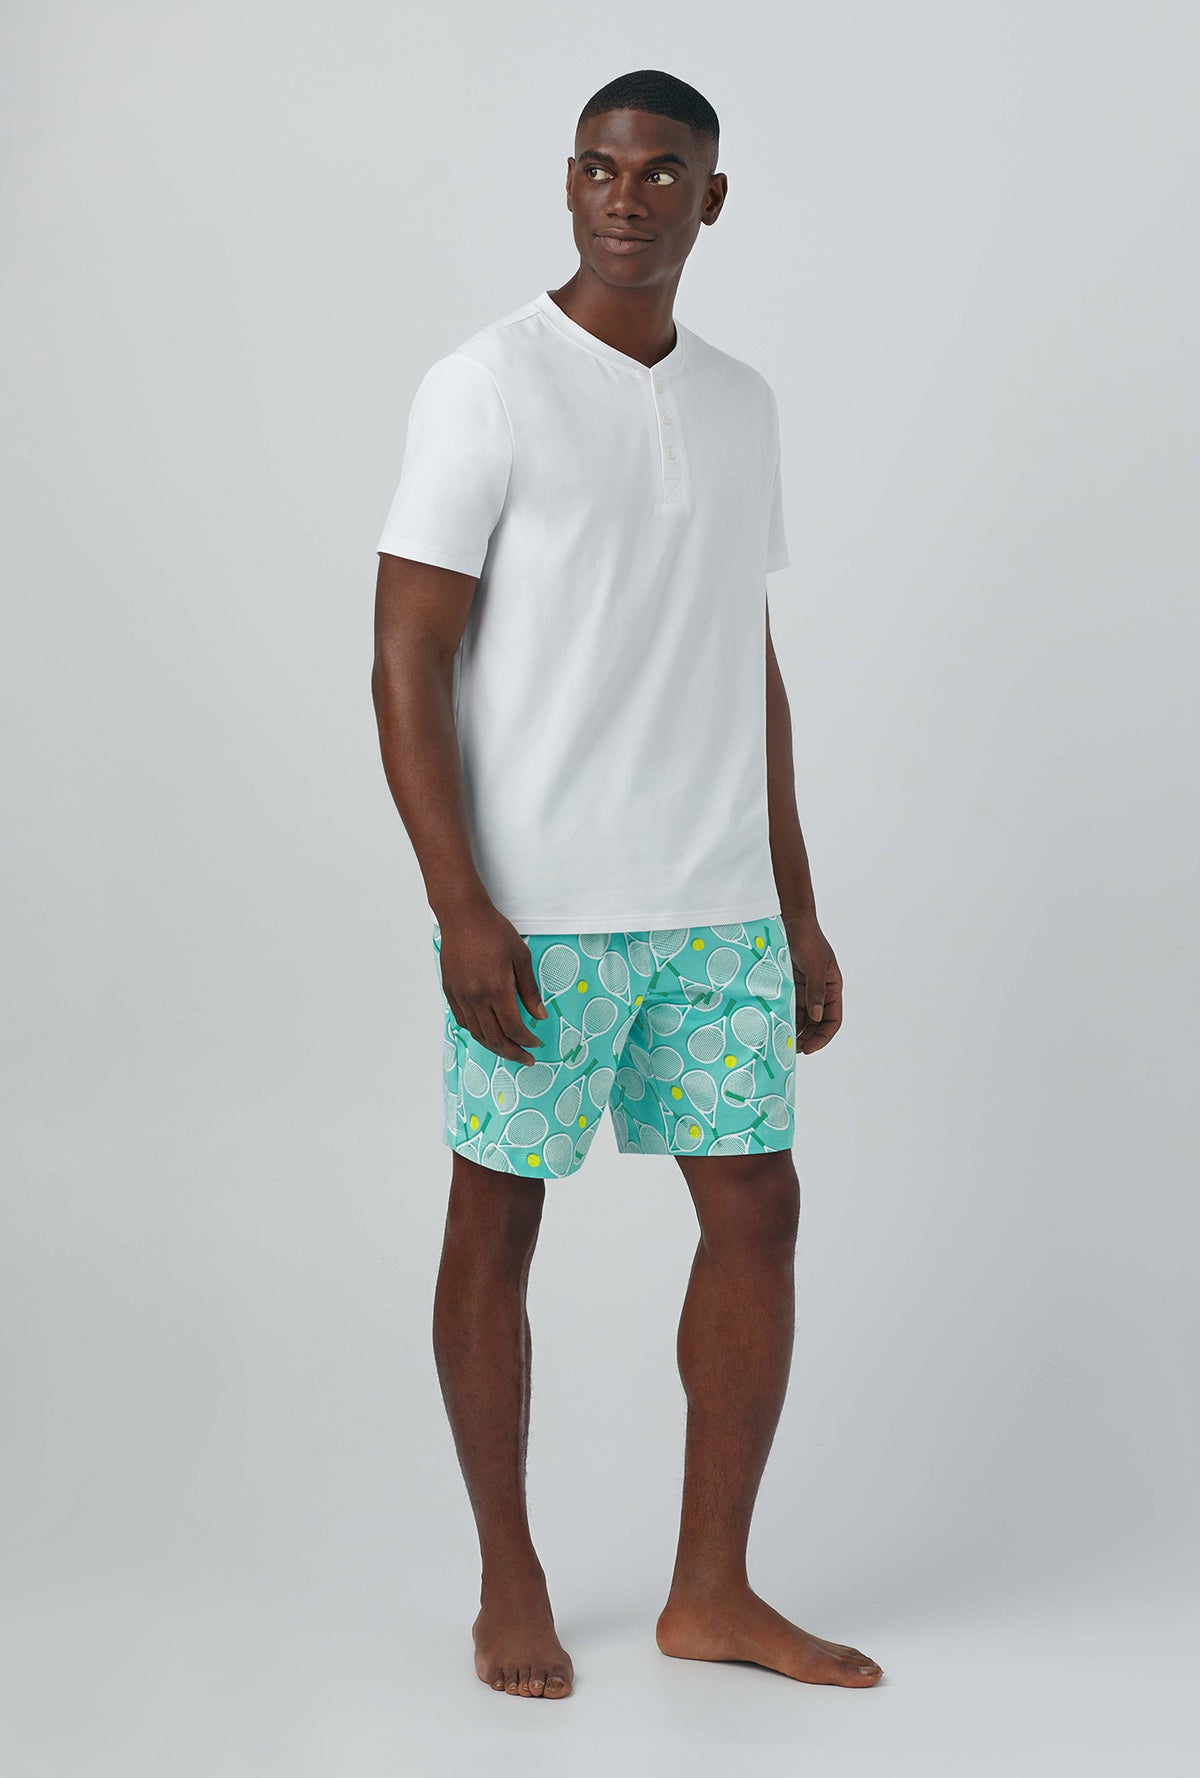 A man wearing green Short Sleeve Henley Stretch Jersey PJ Set with Tennis Club print